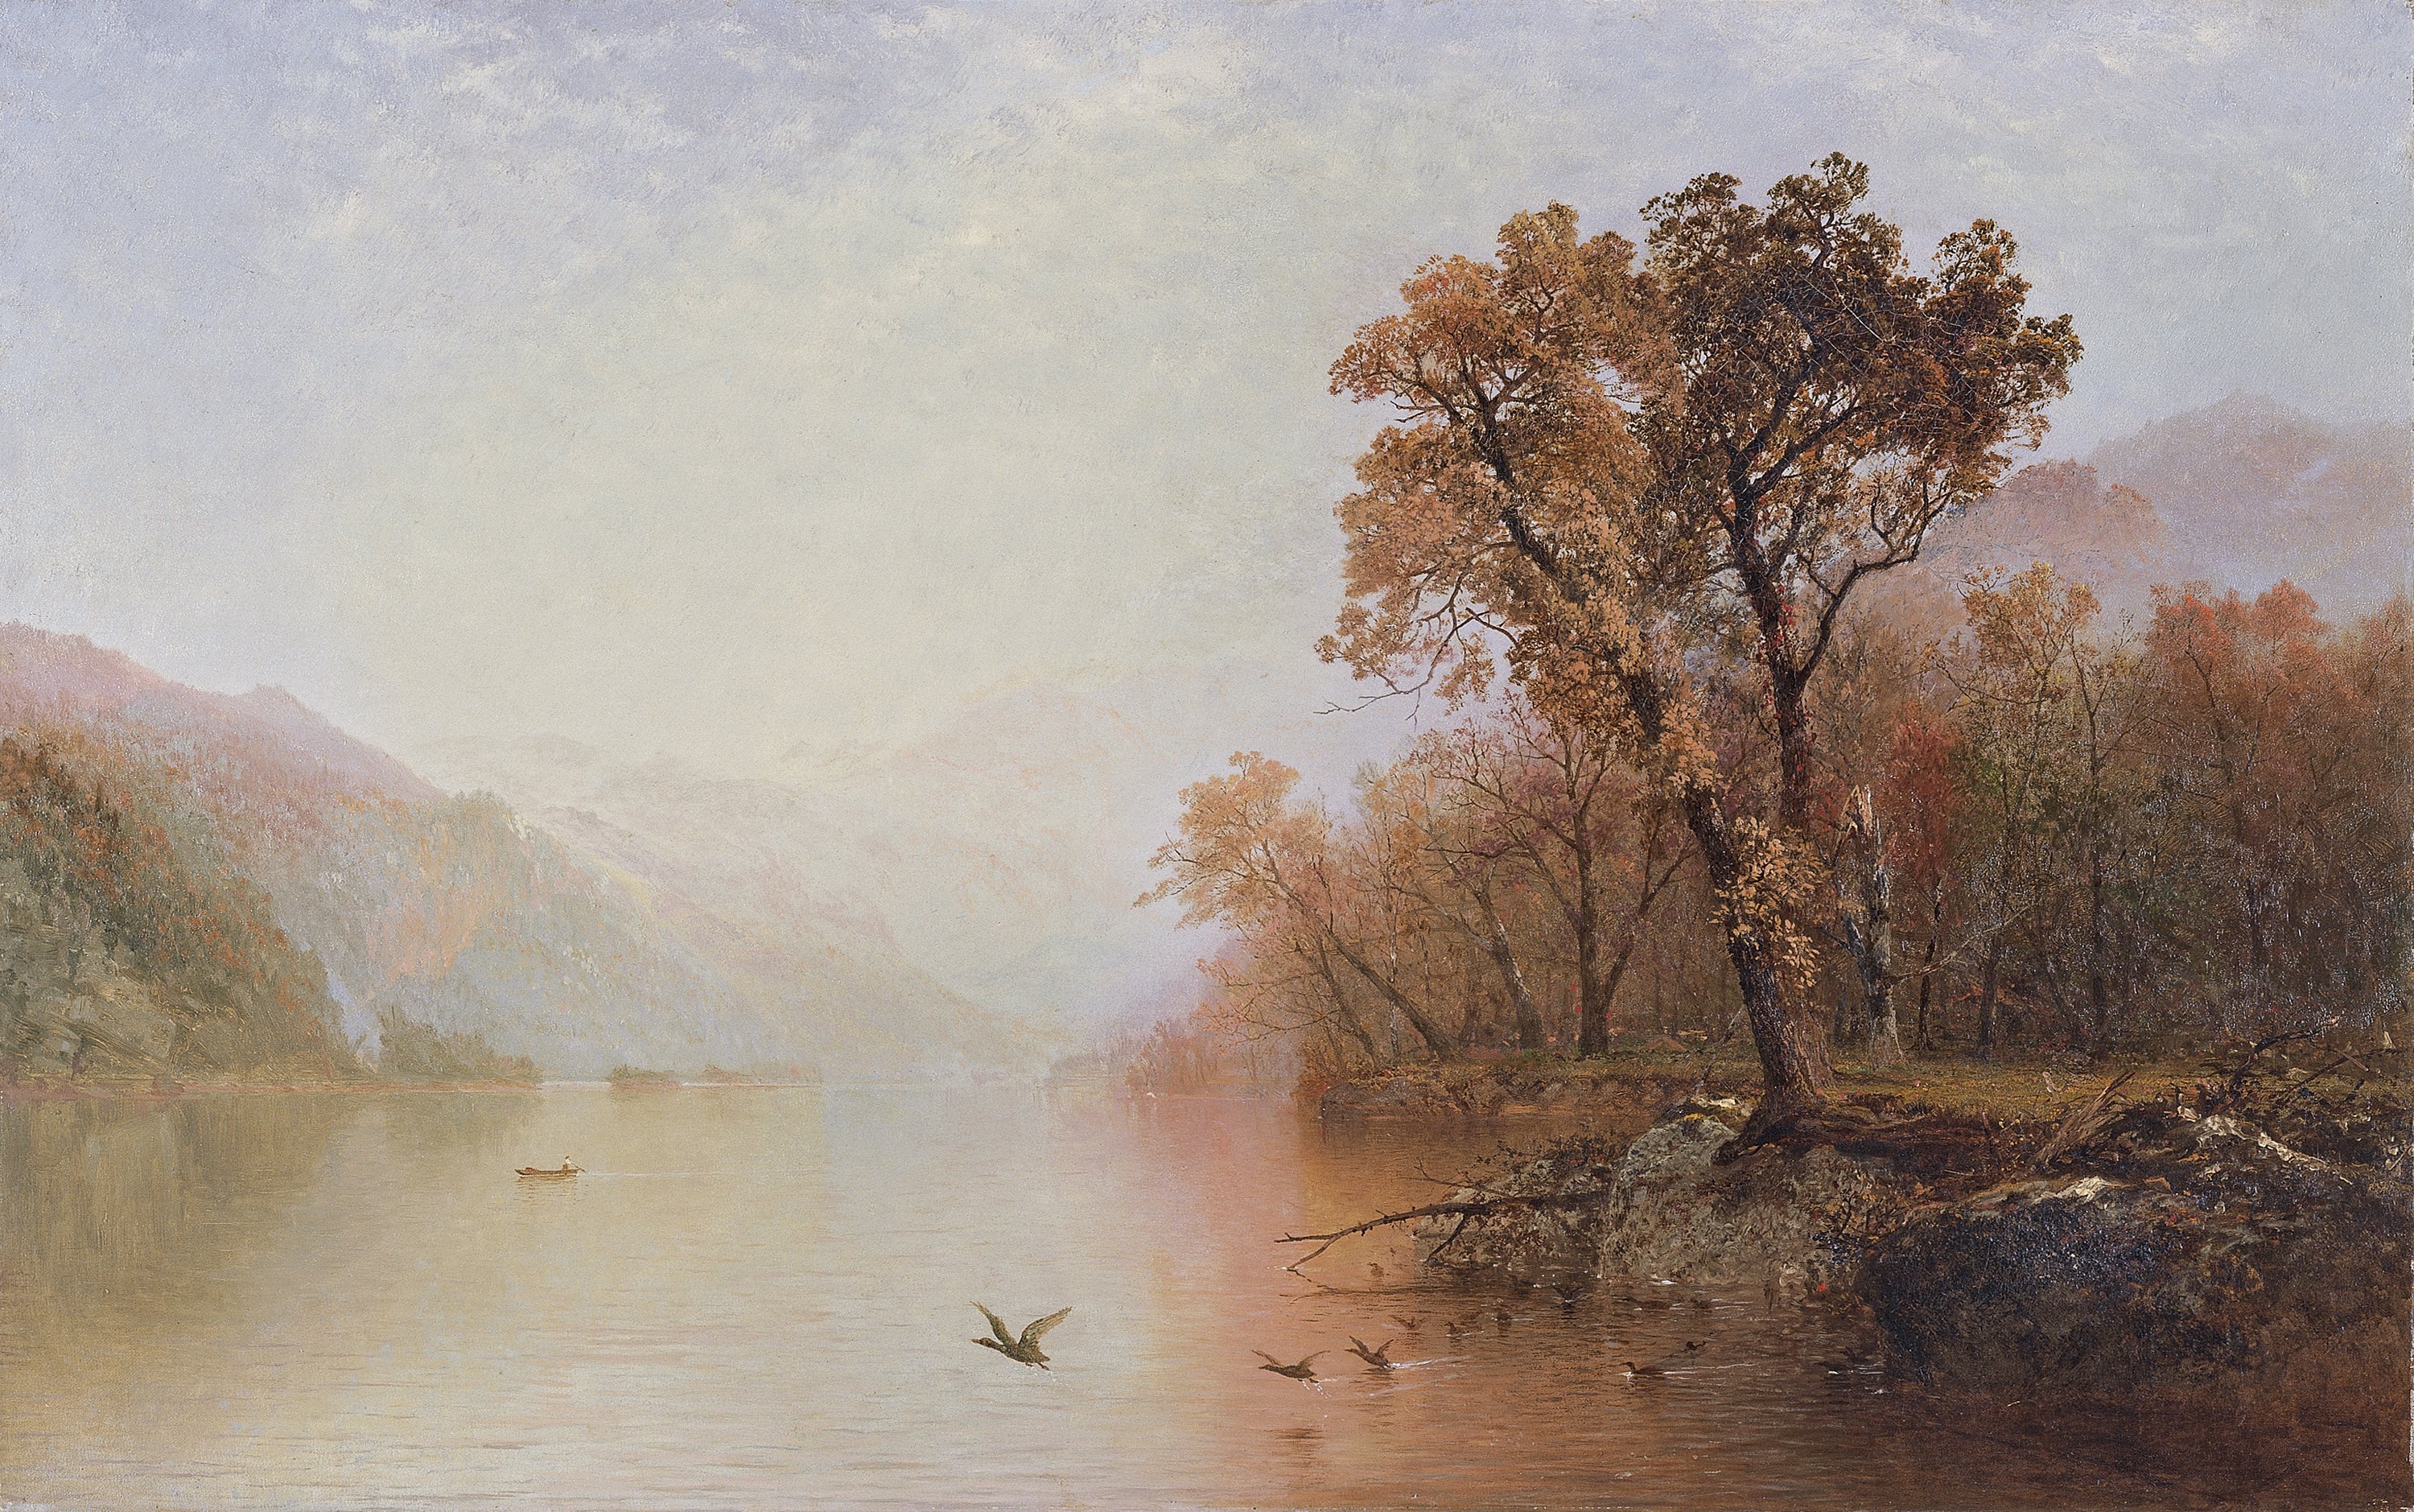 Lake George. El lago George, c. 1860